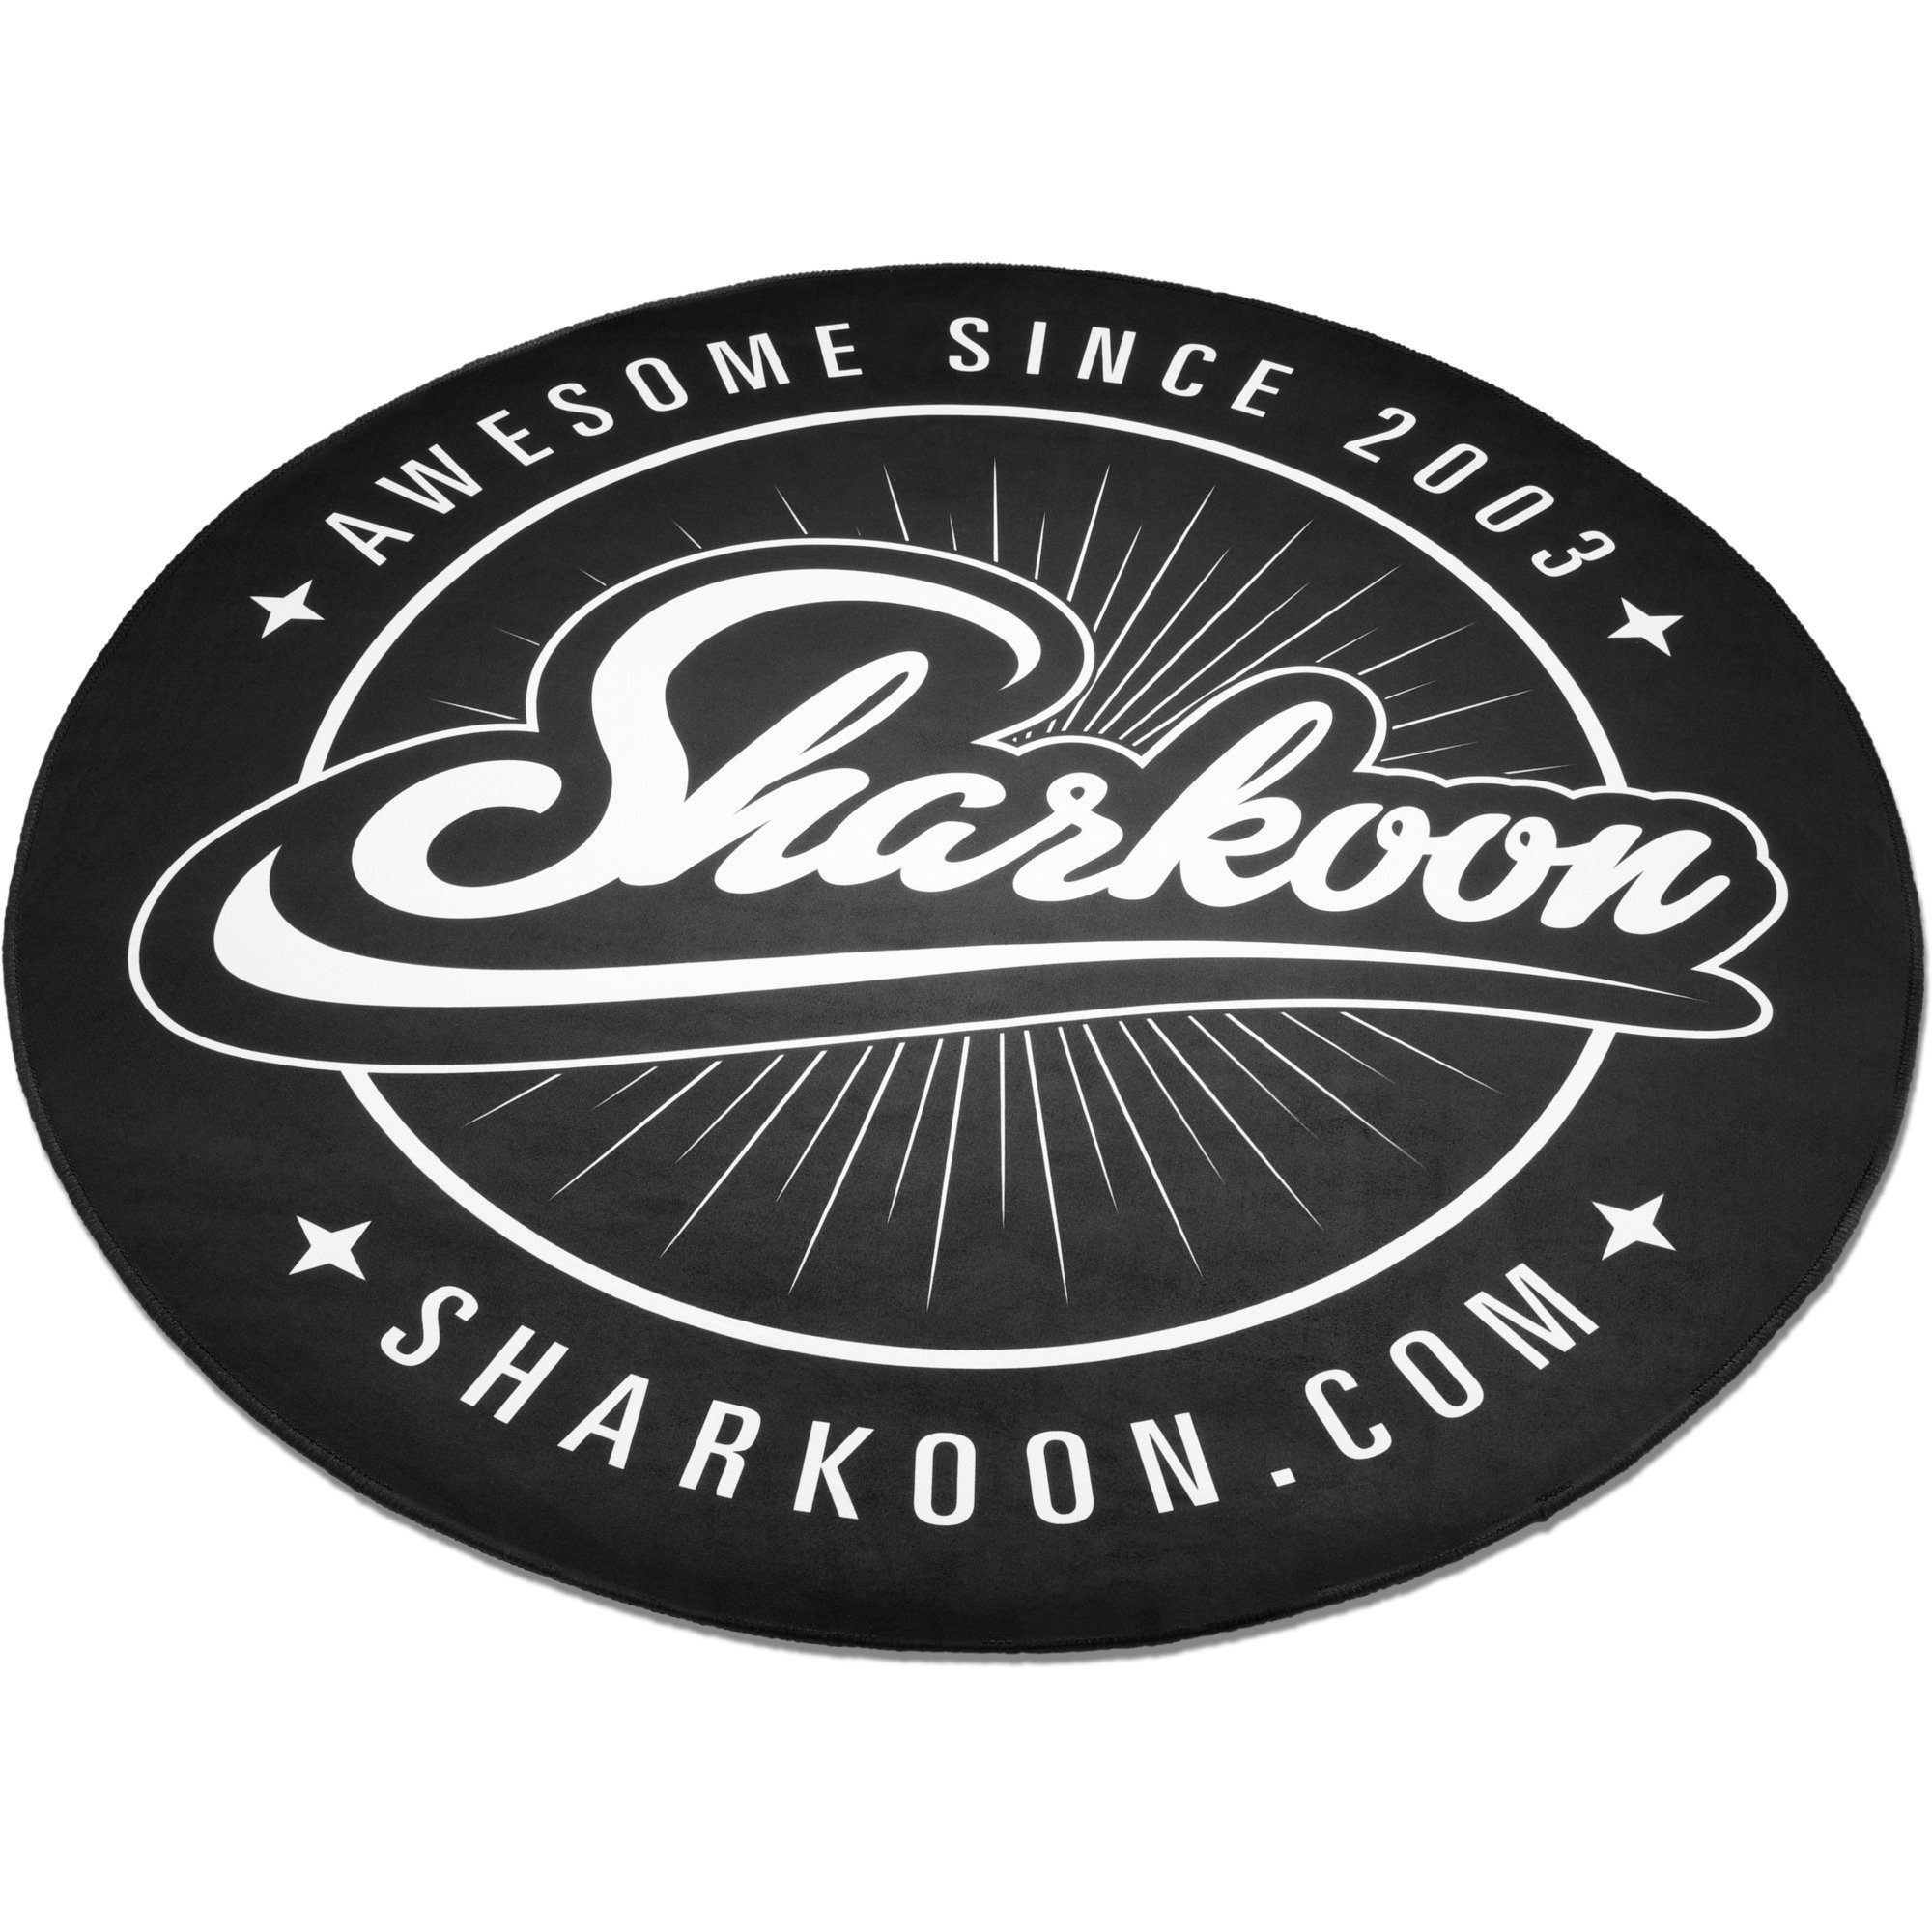 Schutzmatte Sharkoon Mat, Floor Gaming-Stuhl Sharkoon